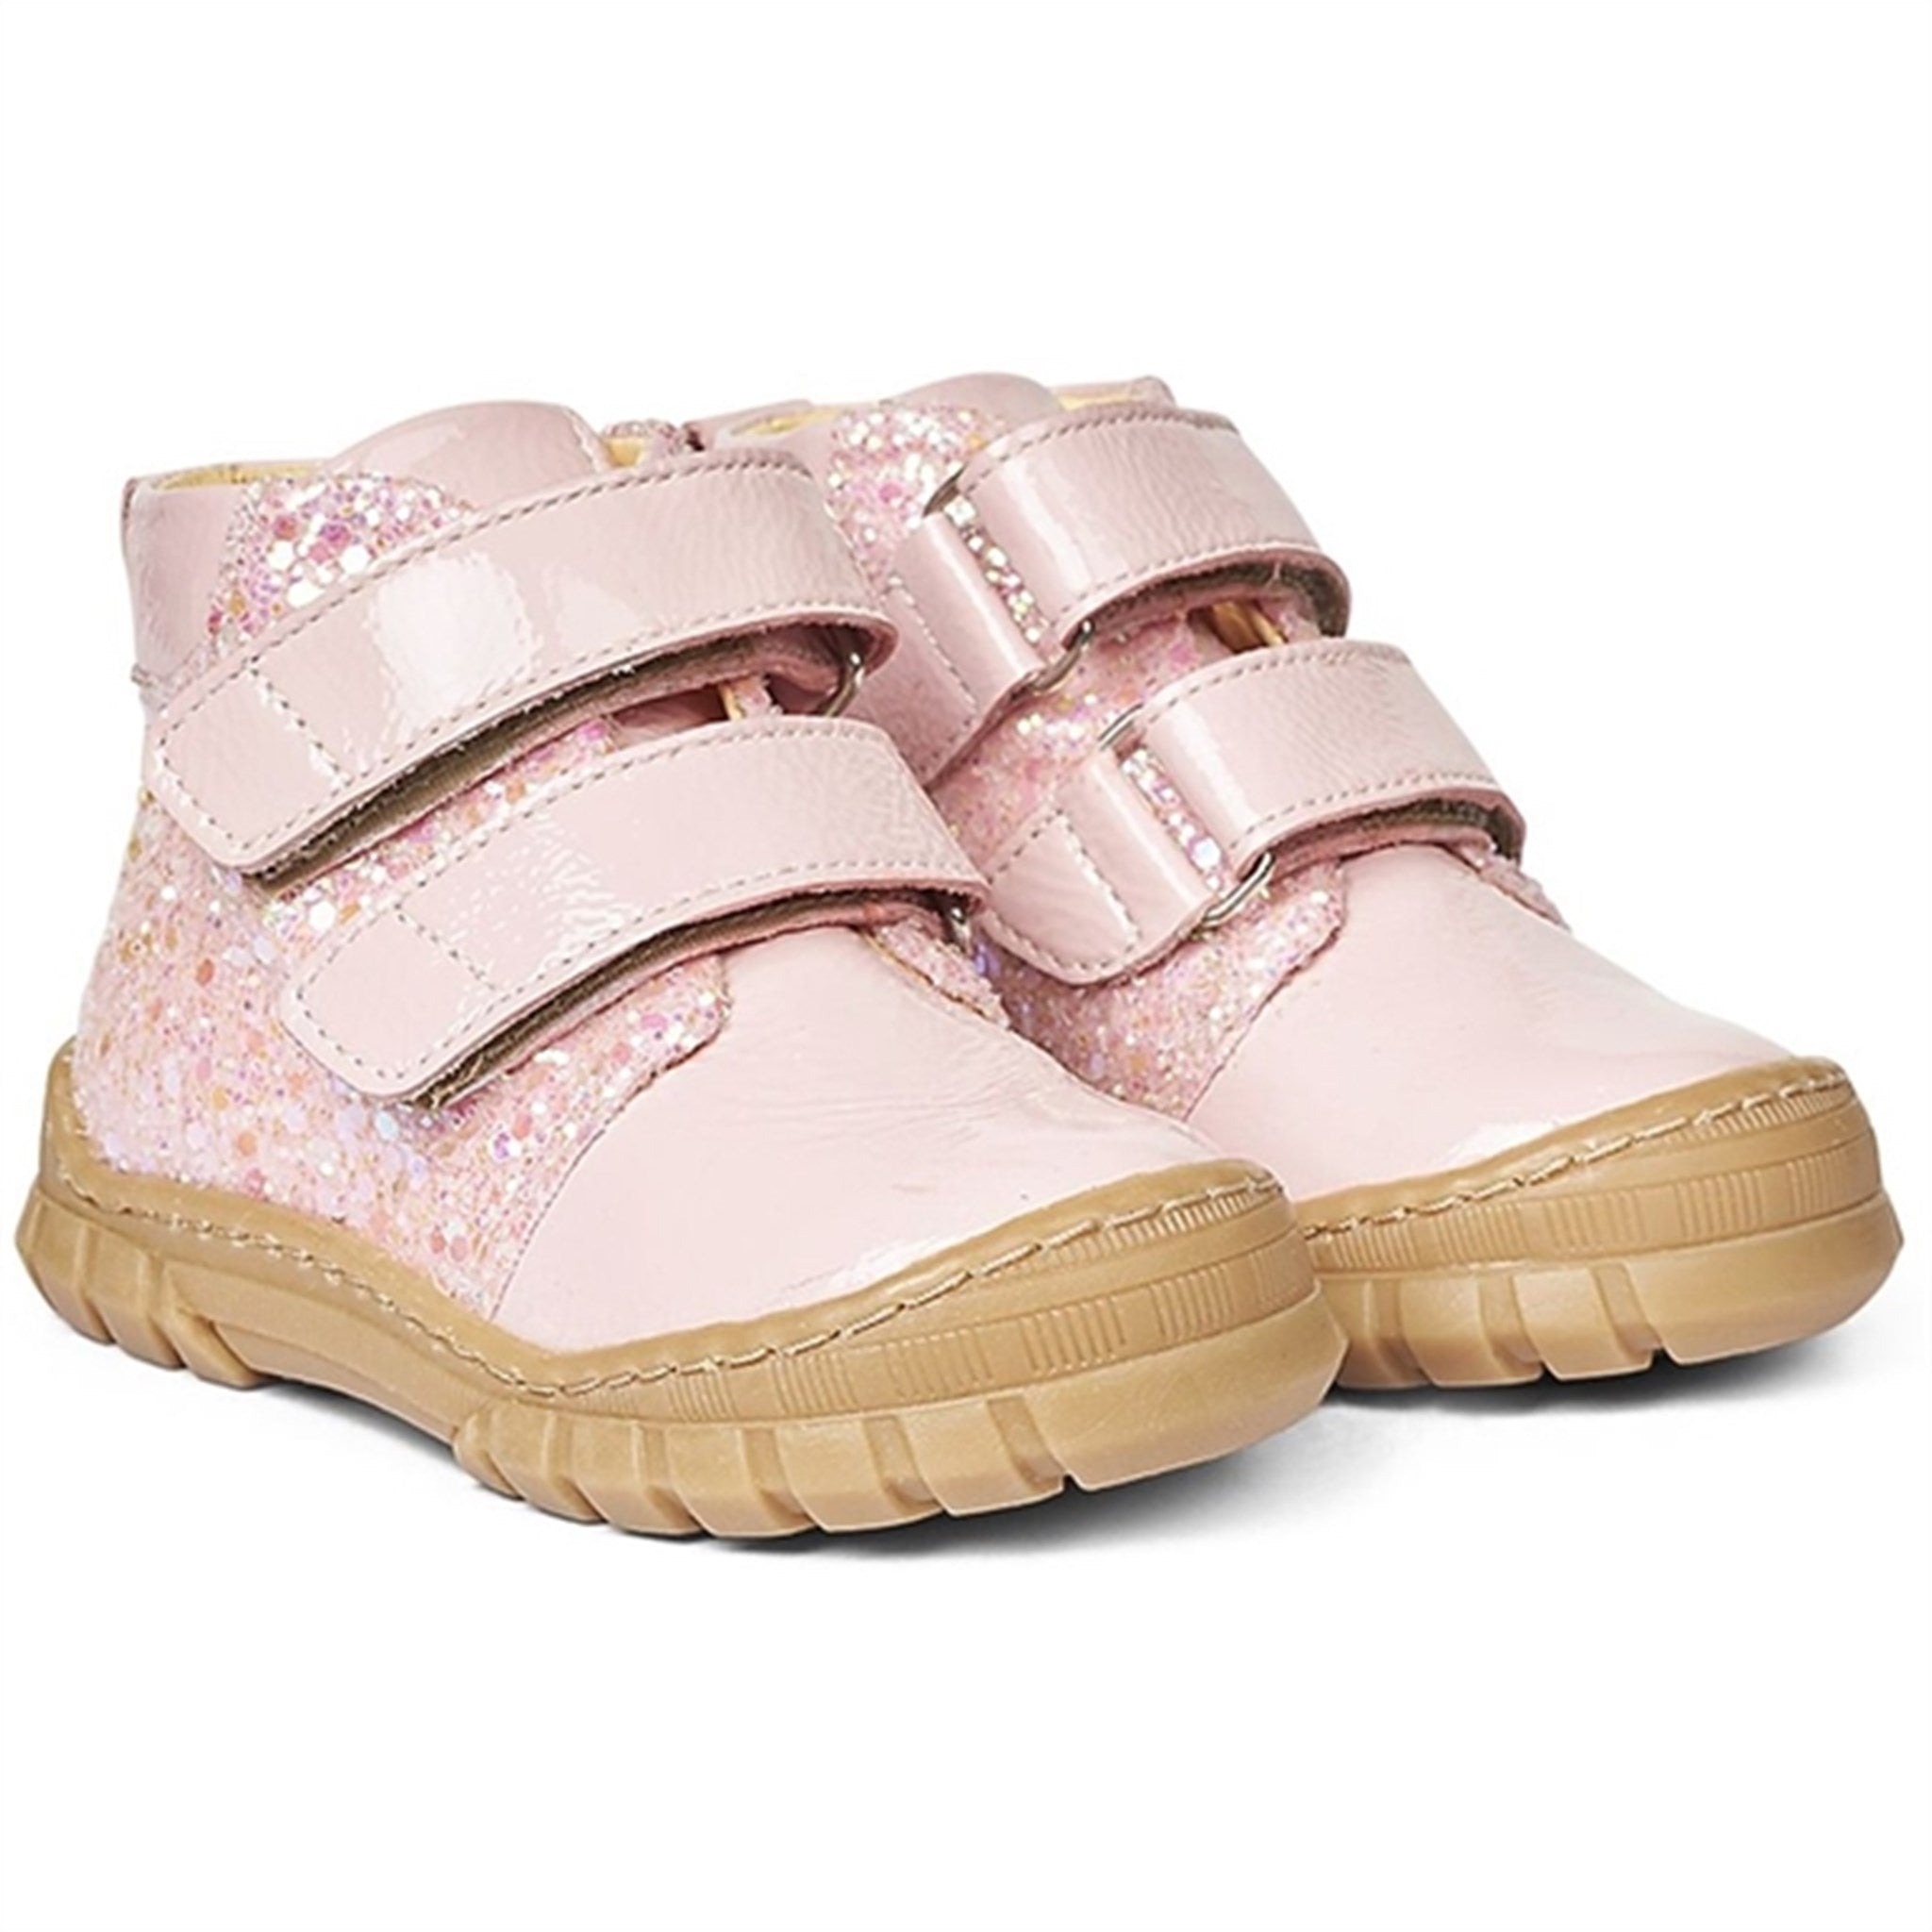 Angulus Starter Shoe W. Velcro And Glitter Details Peach/Peach Glitter